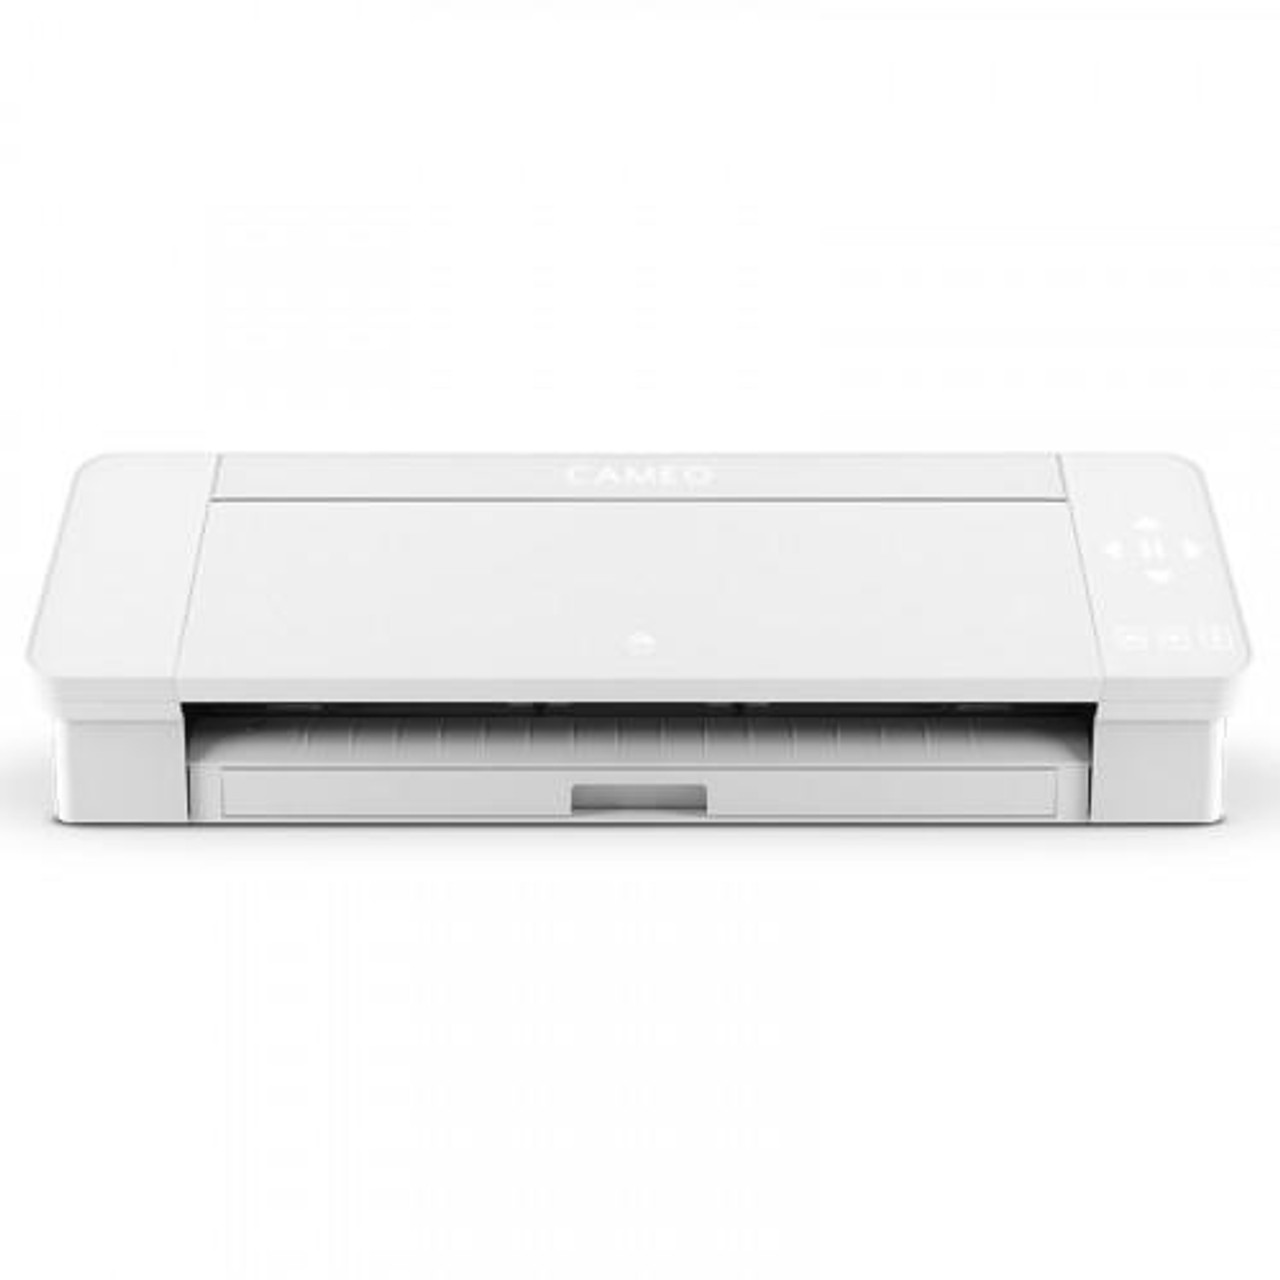 Silhouette Cameo 3-4t Wireless Cutting Machine - White (SILHOUETTE-CAMEO 3)